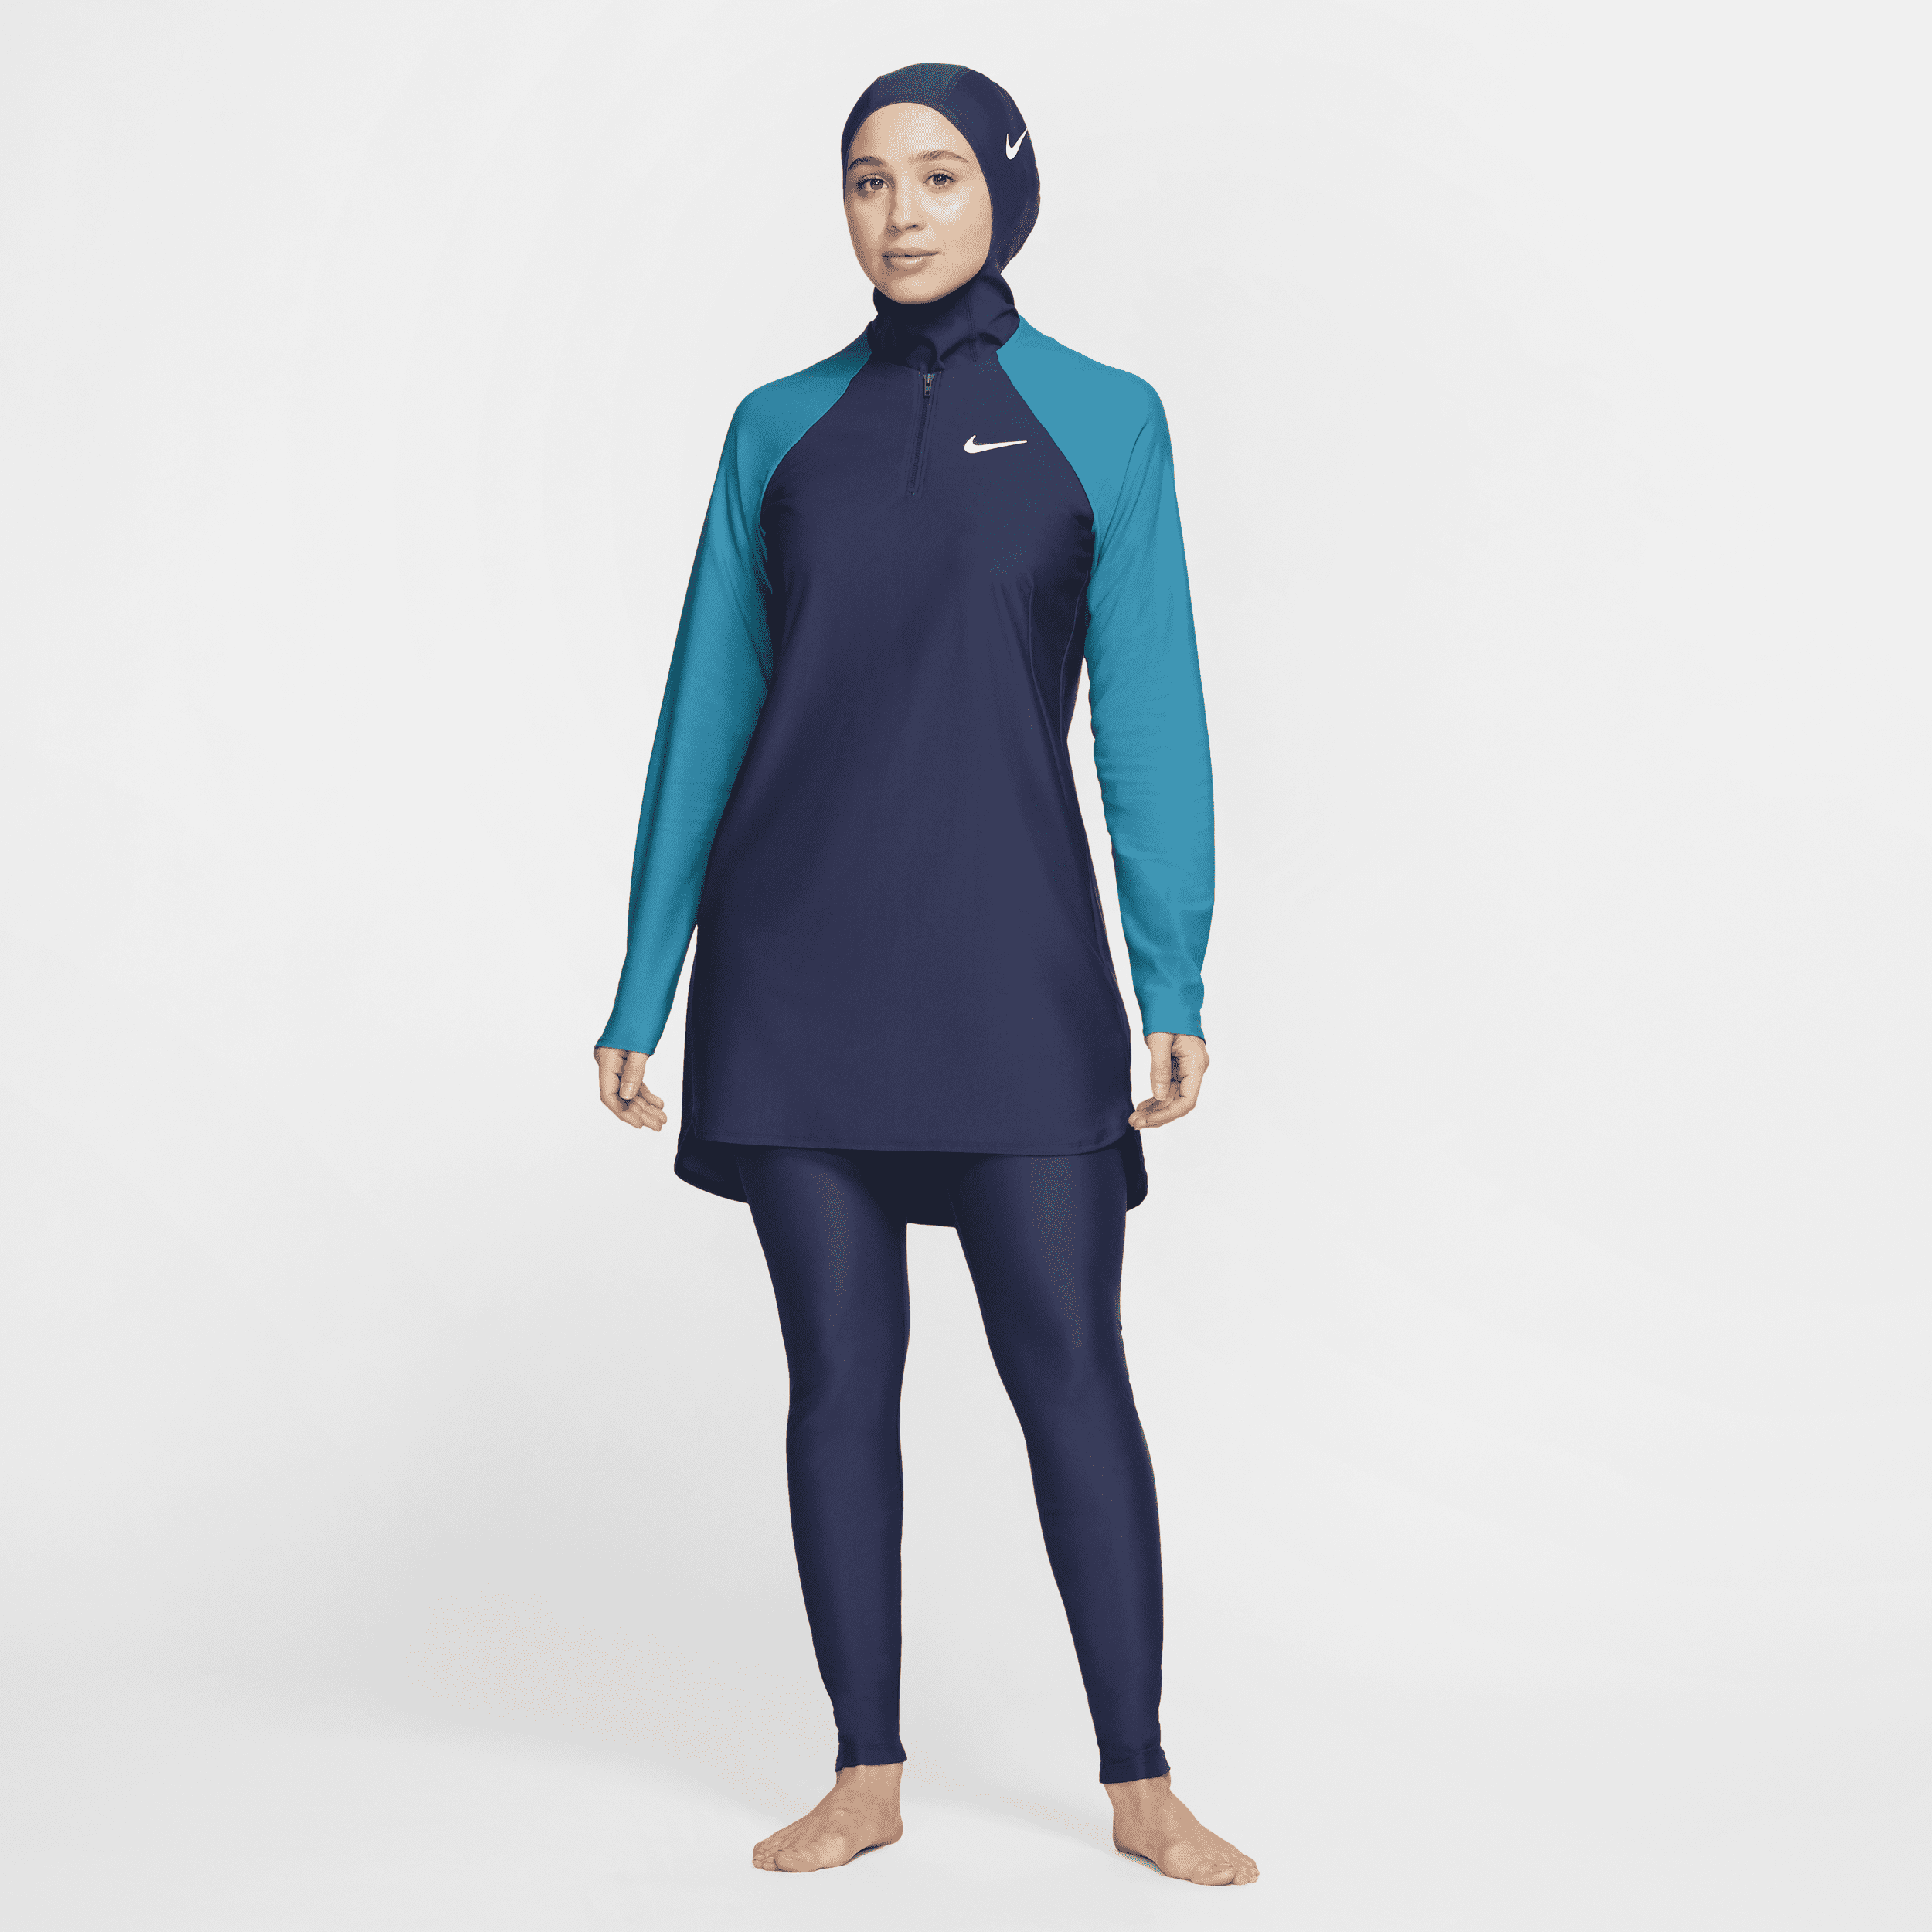 Fuldt dækkende slanke Nike Victory-svømmeleggings til kvinder - blå